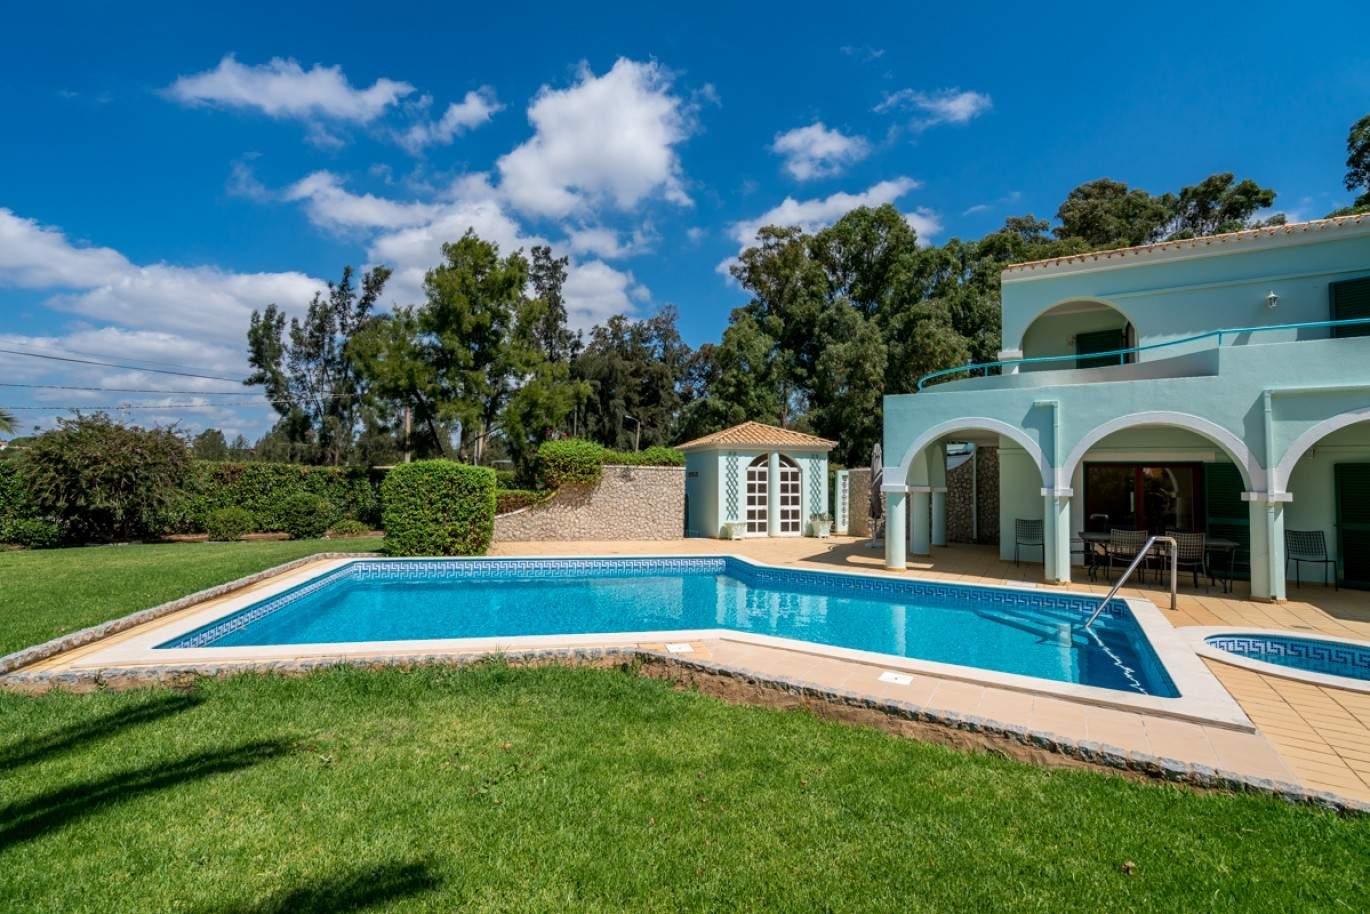 Sale of villa with garden and pool in Penina, Alvor, Algarve, Portugal_83421